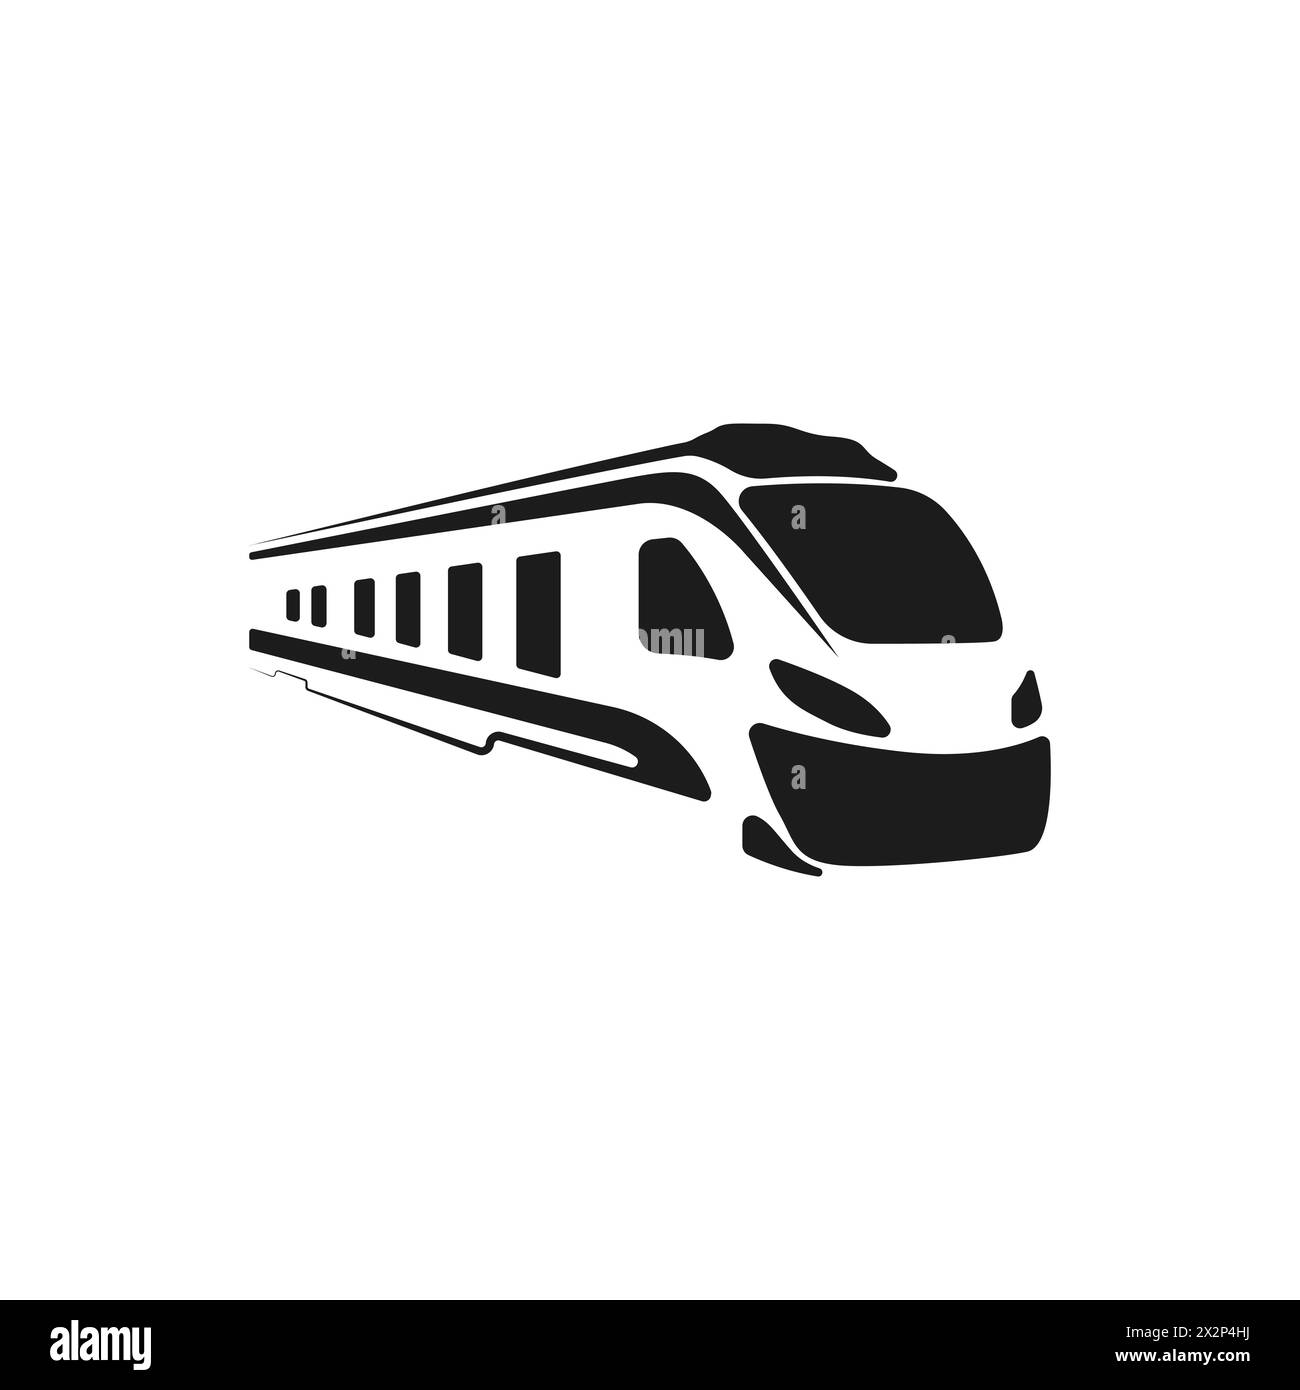 High-speed train black silhouette. Railroad vector icon. Exspress passenger railway transportation. Railway transport vector. Vector illustration. Stock Vector